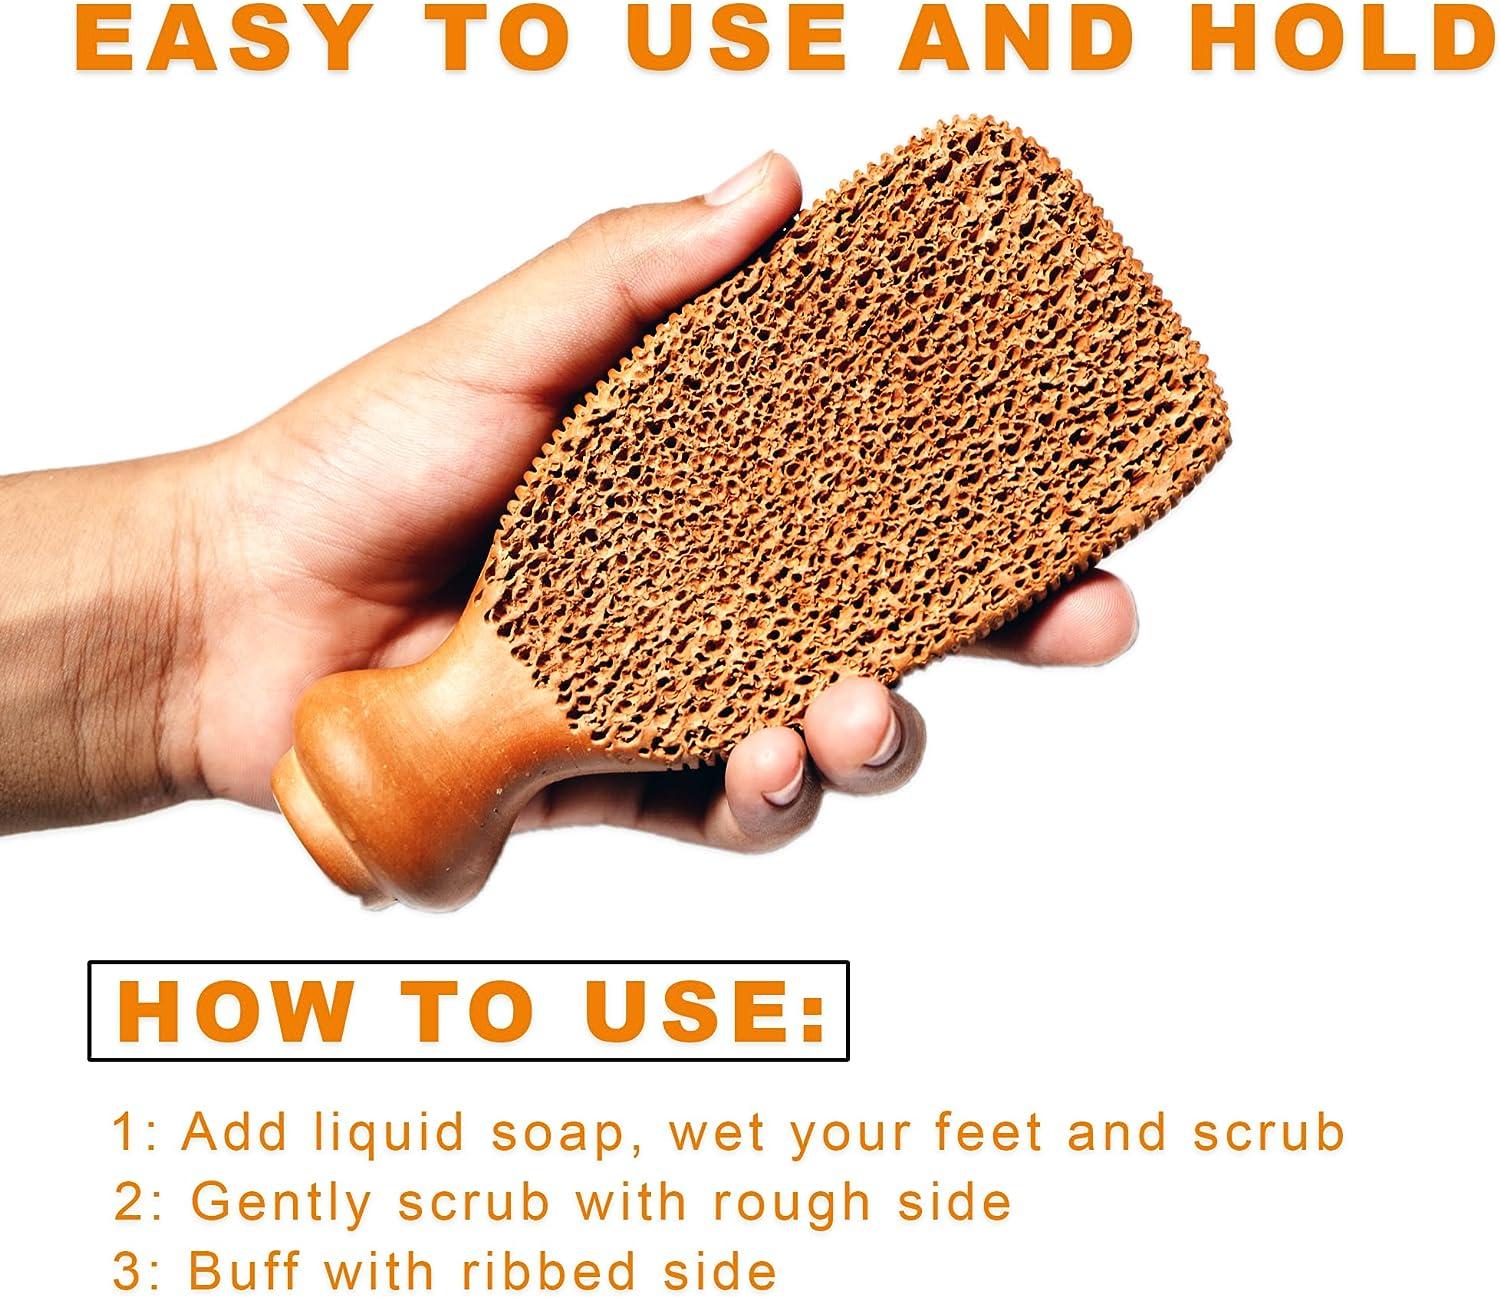 1pc Foot Pumice Stone & Exfoliating Scrub Tool, Safe & Easy for Feet Callus  & Rough Heels Hard Skin Callus Remover